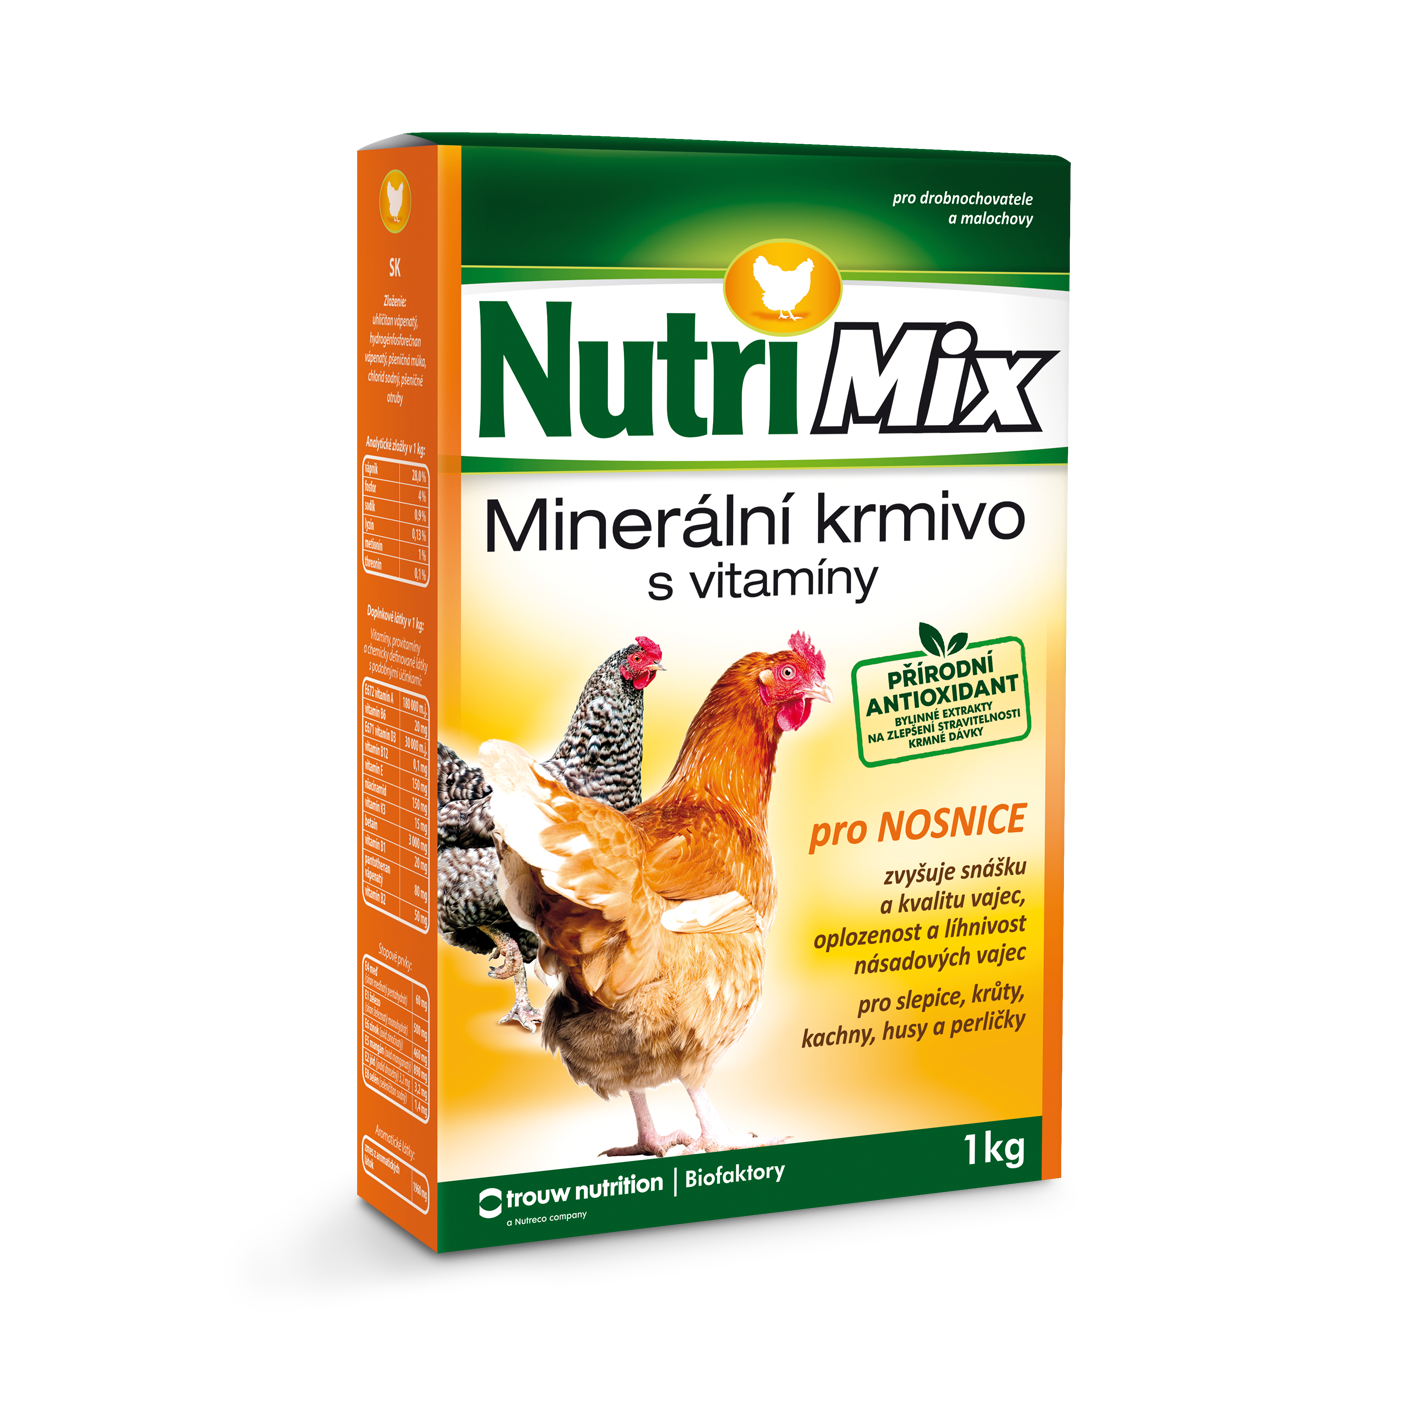 Nutri Mix BIOFAKTORY pro nosnice 1kg